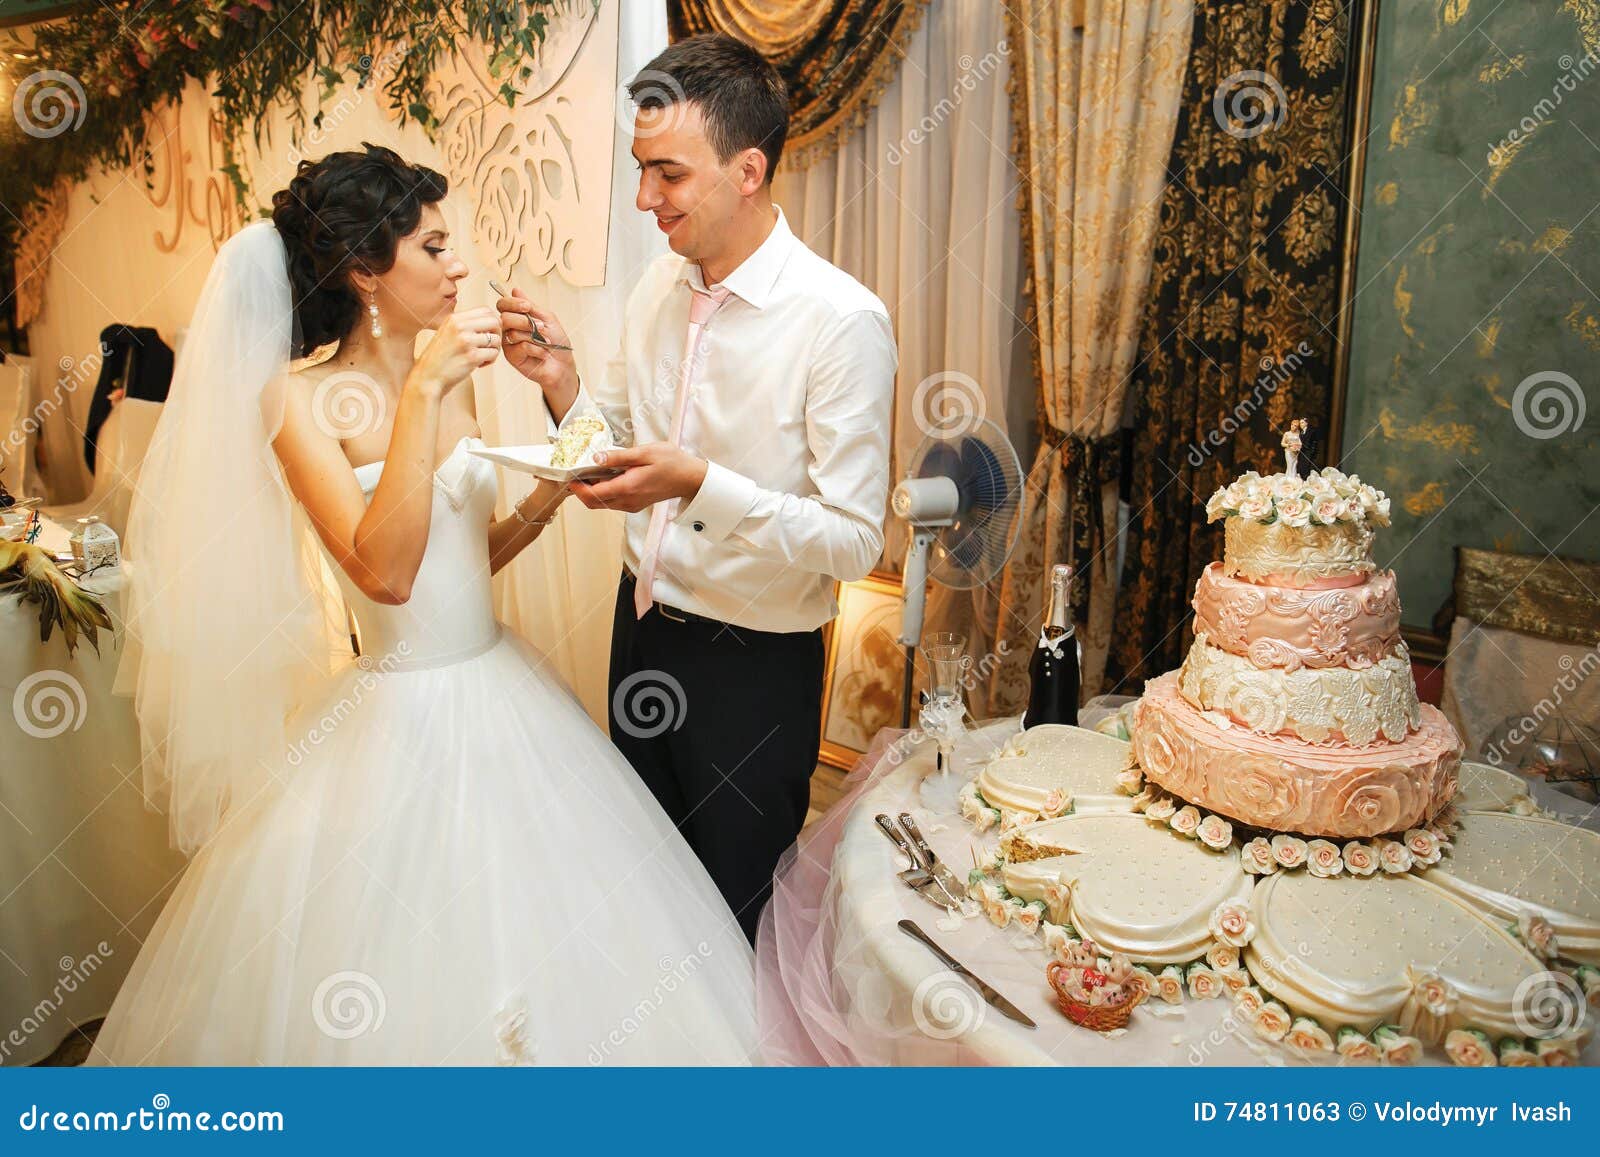 the brides eatting a wedding cake